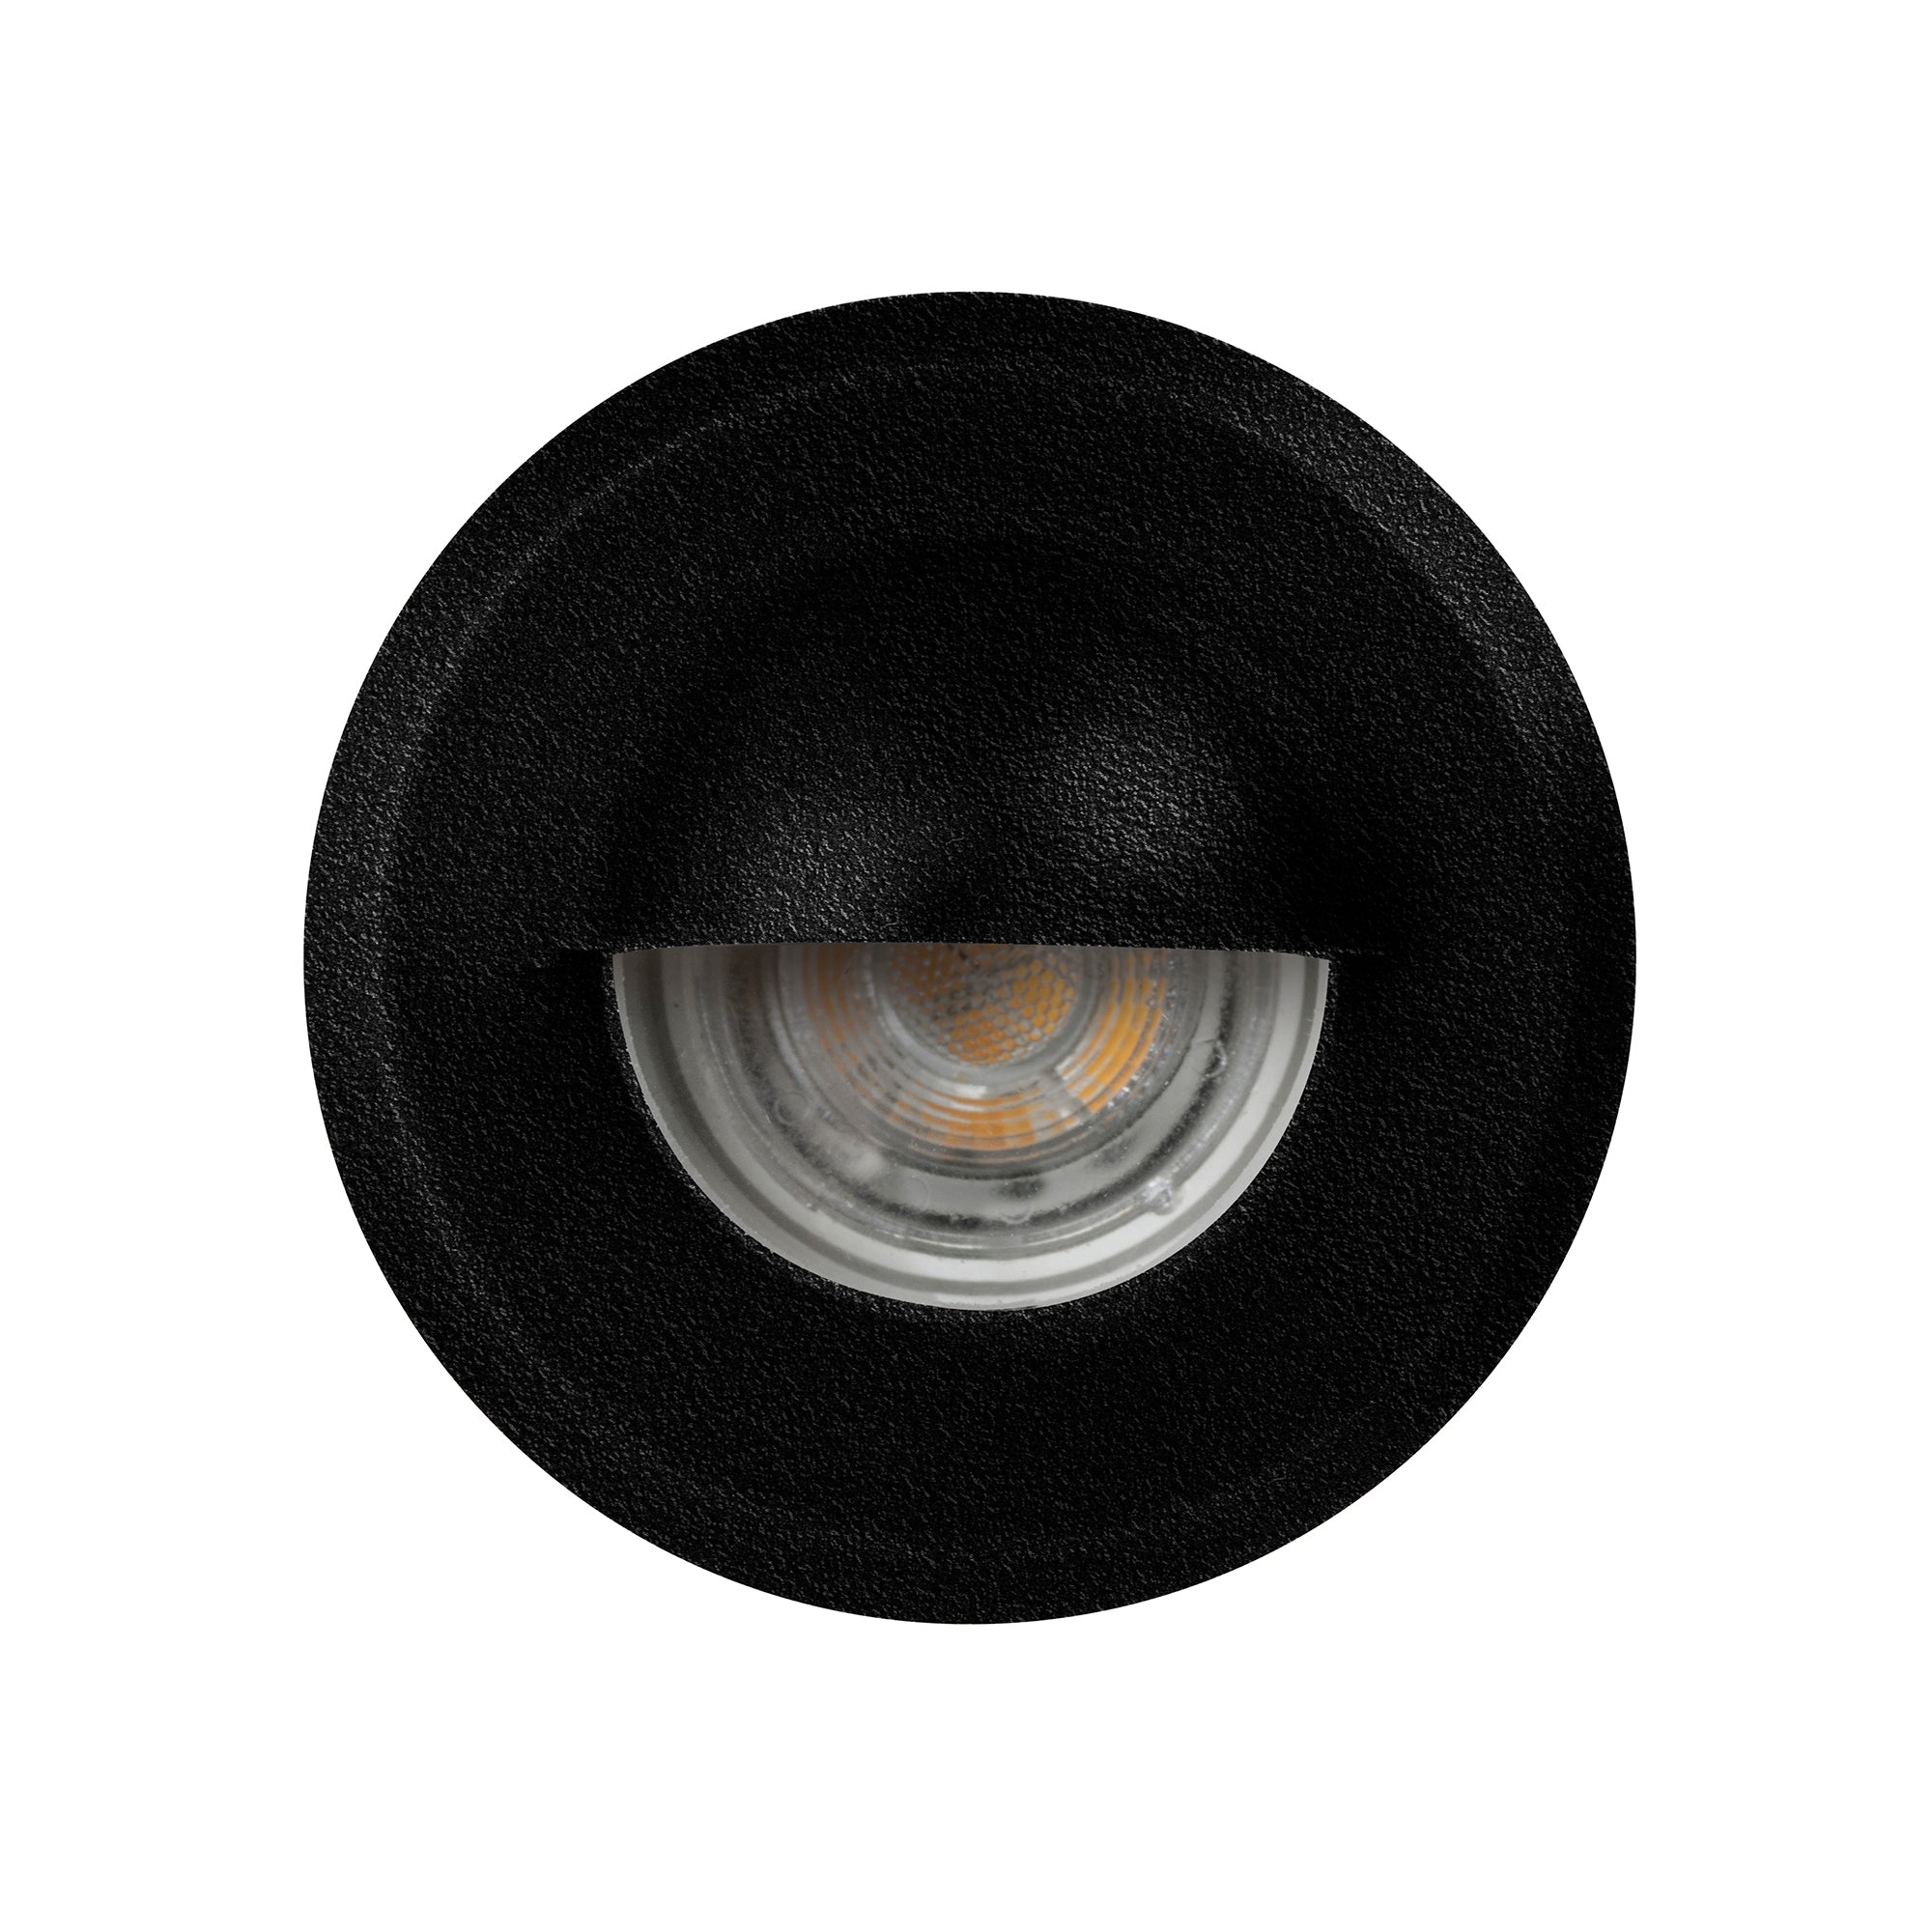 HV2899NW-BLK -  Lokk Black 316 Stainless Steel LED Wall Light with Eyelid